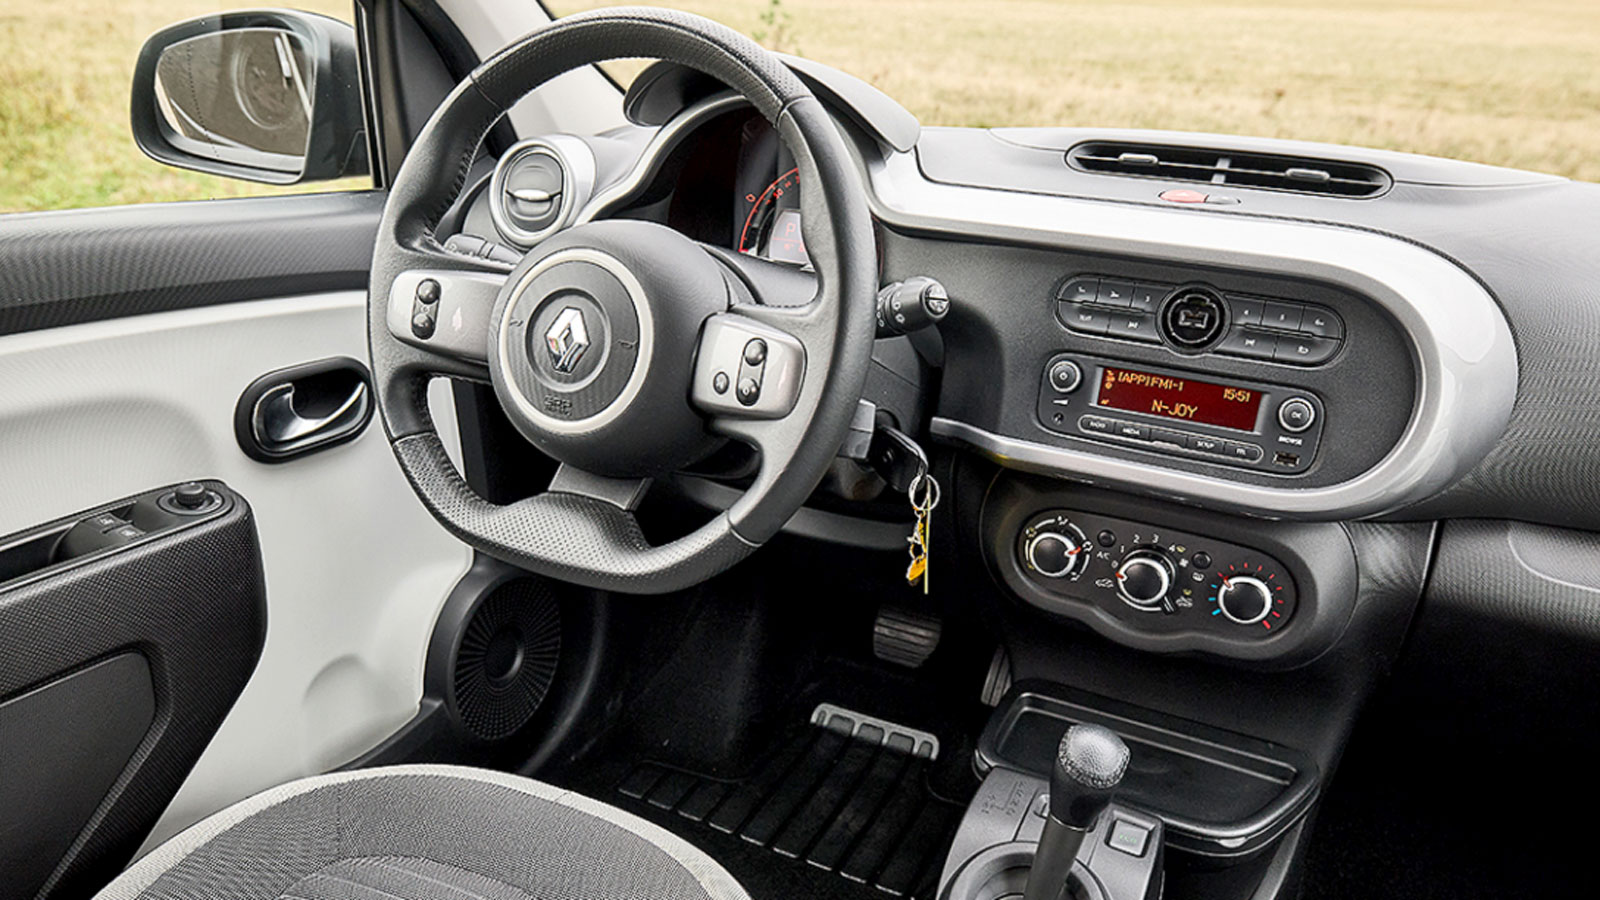 Renault Twingo: Το μοναδικό πισωκίνητο μίνι, αξίζει μεταχειρισμένο;